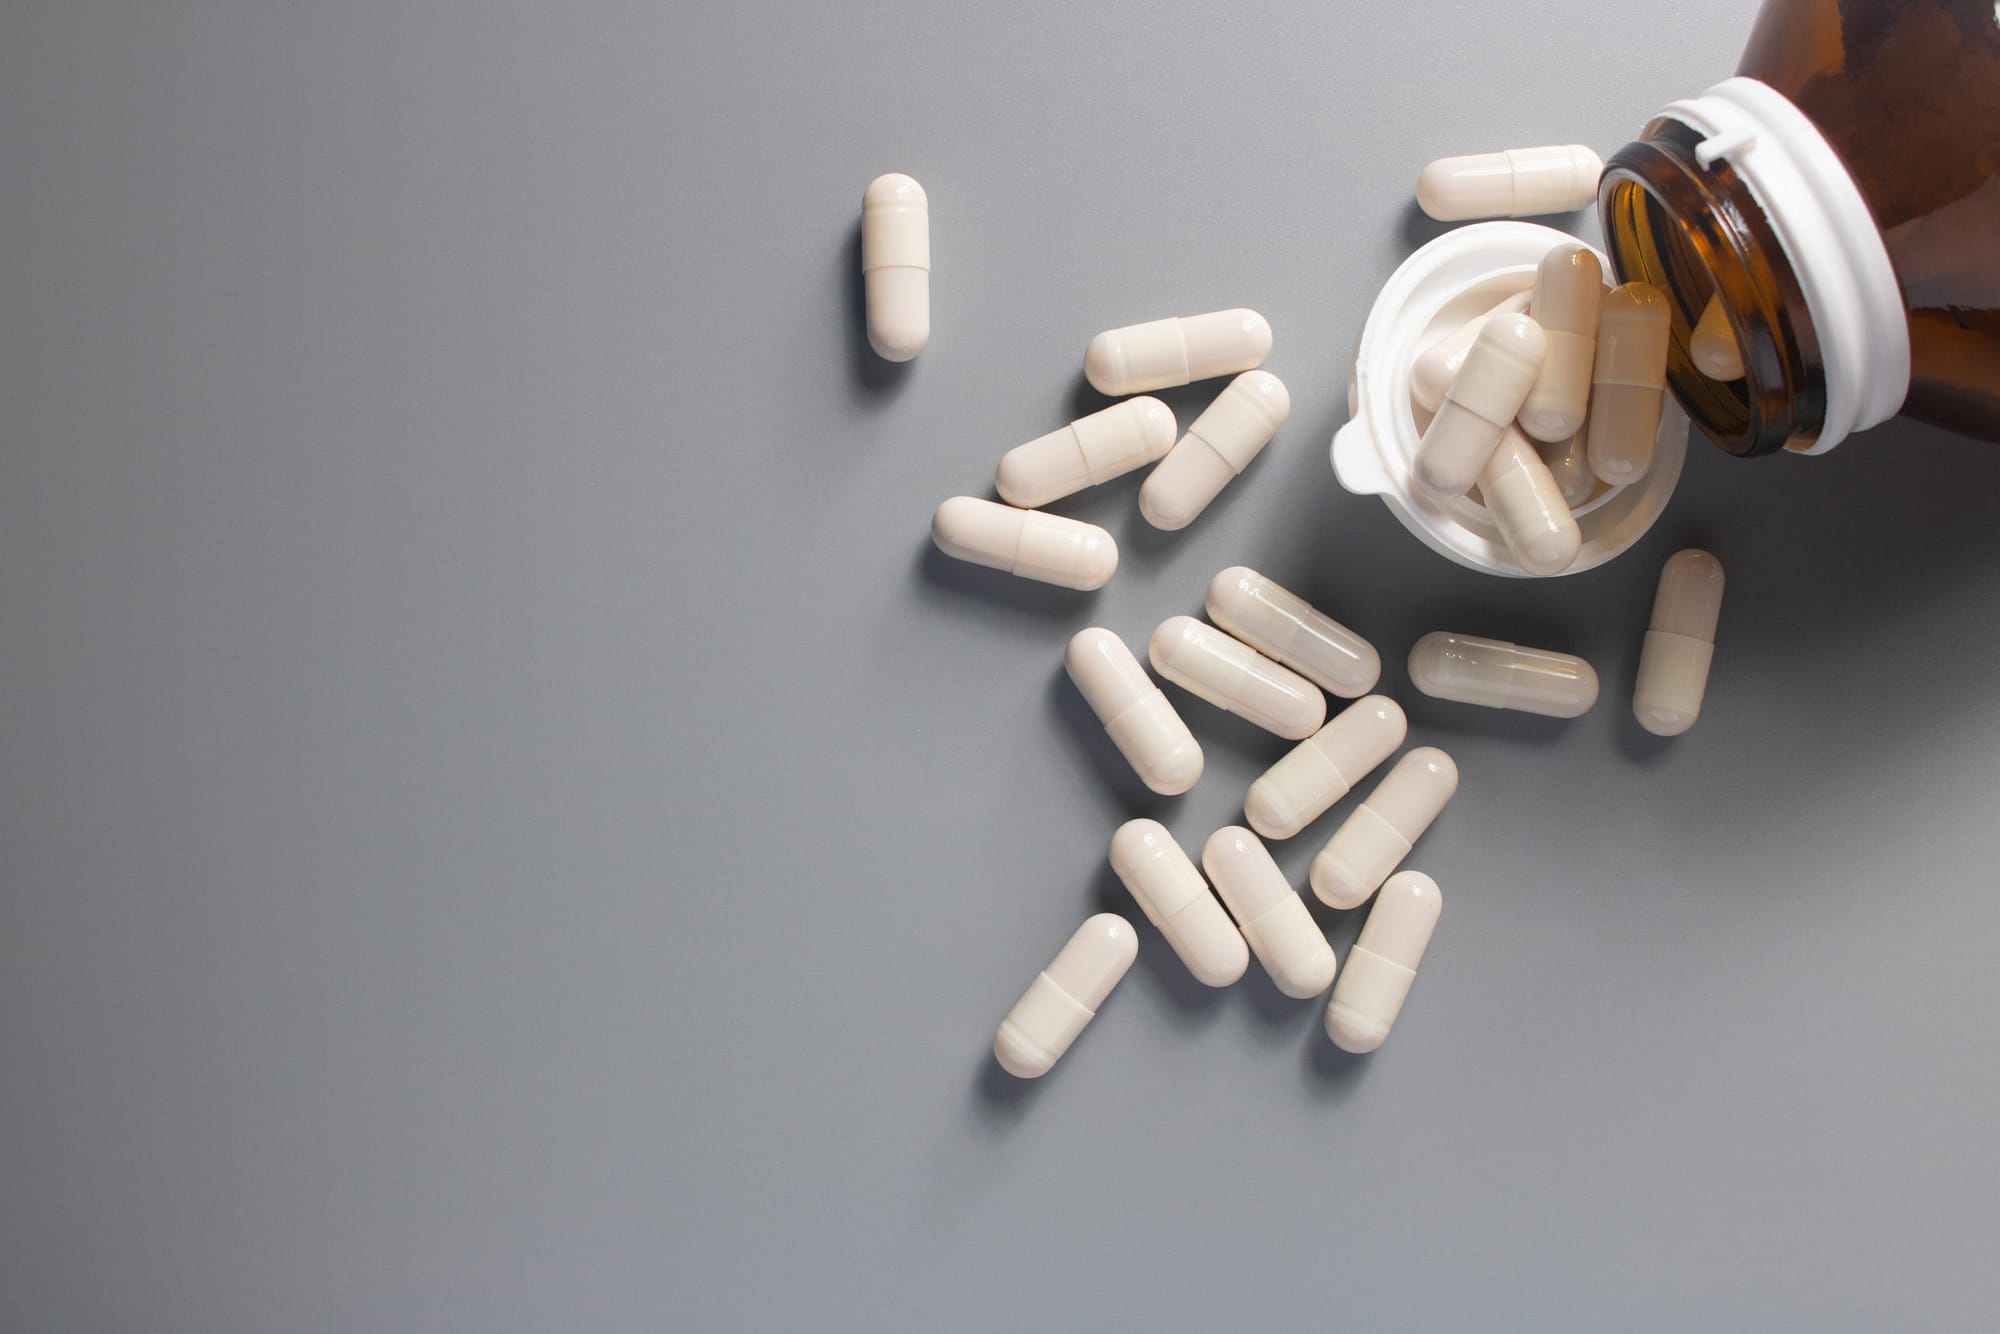 white medicine drug capsule and bottle